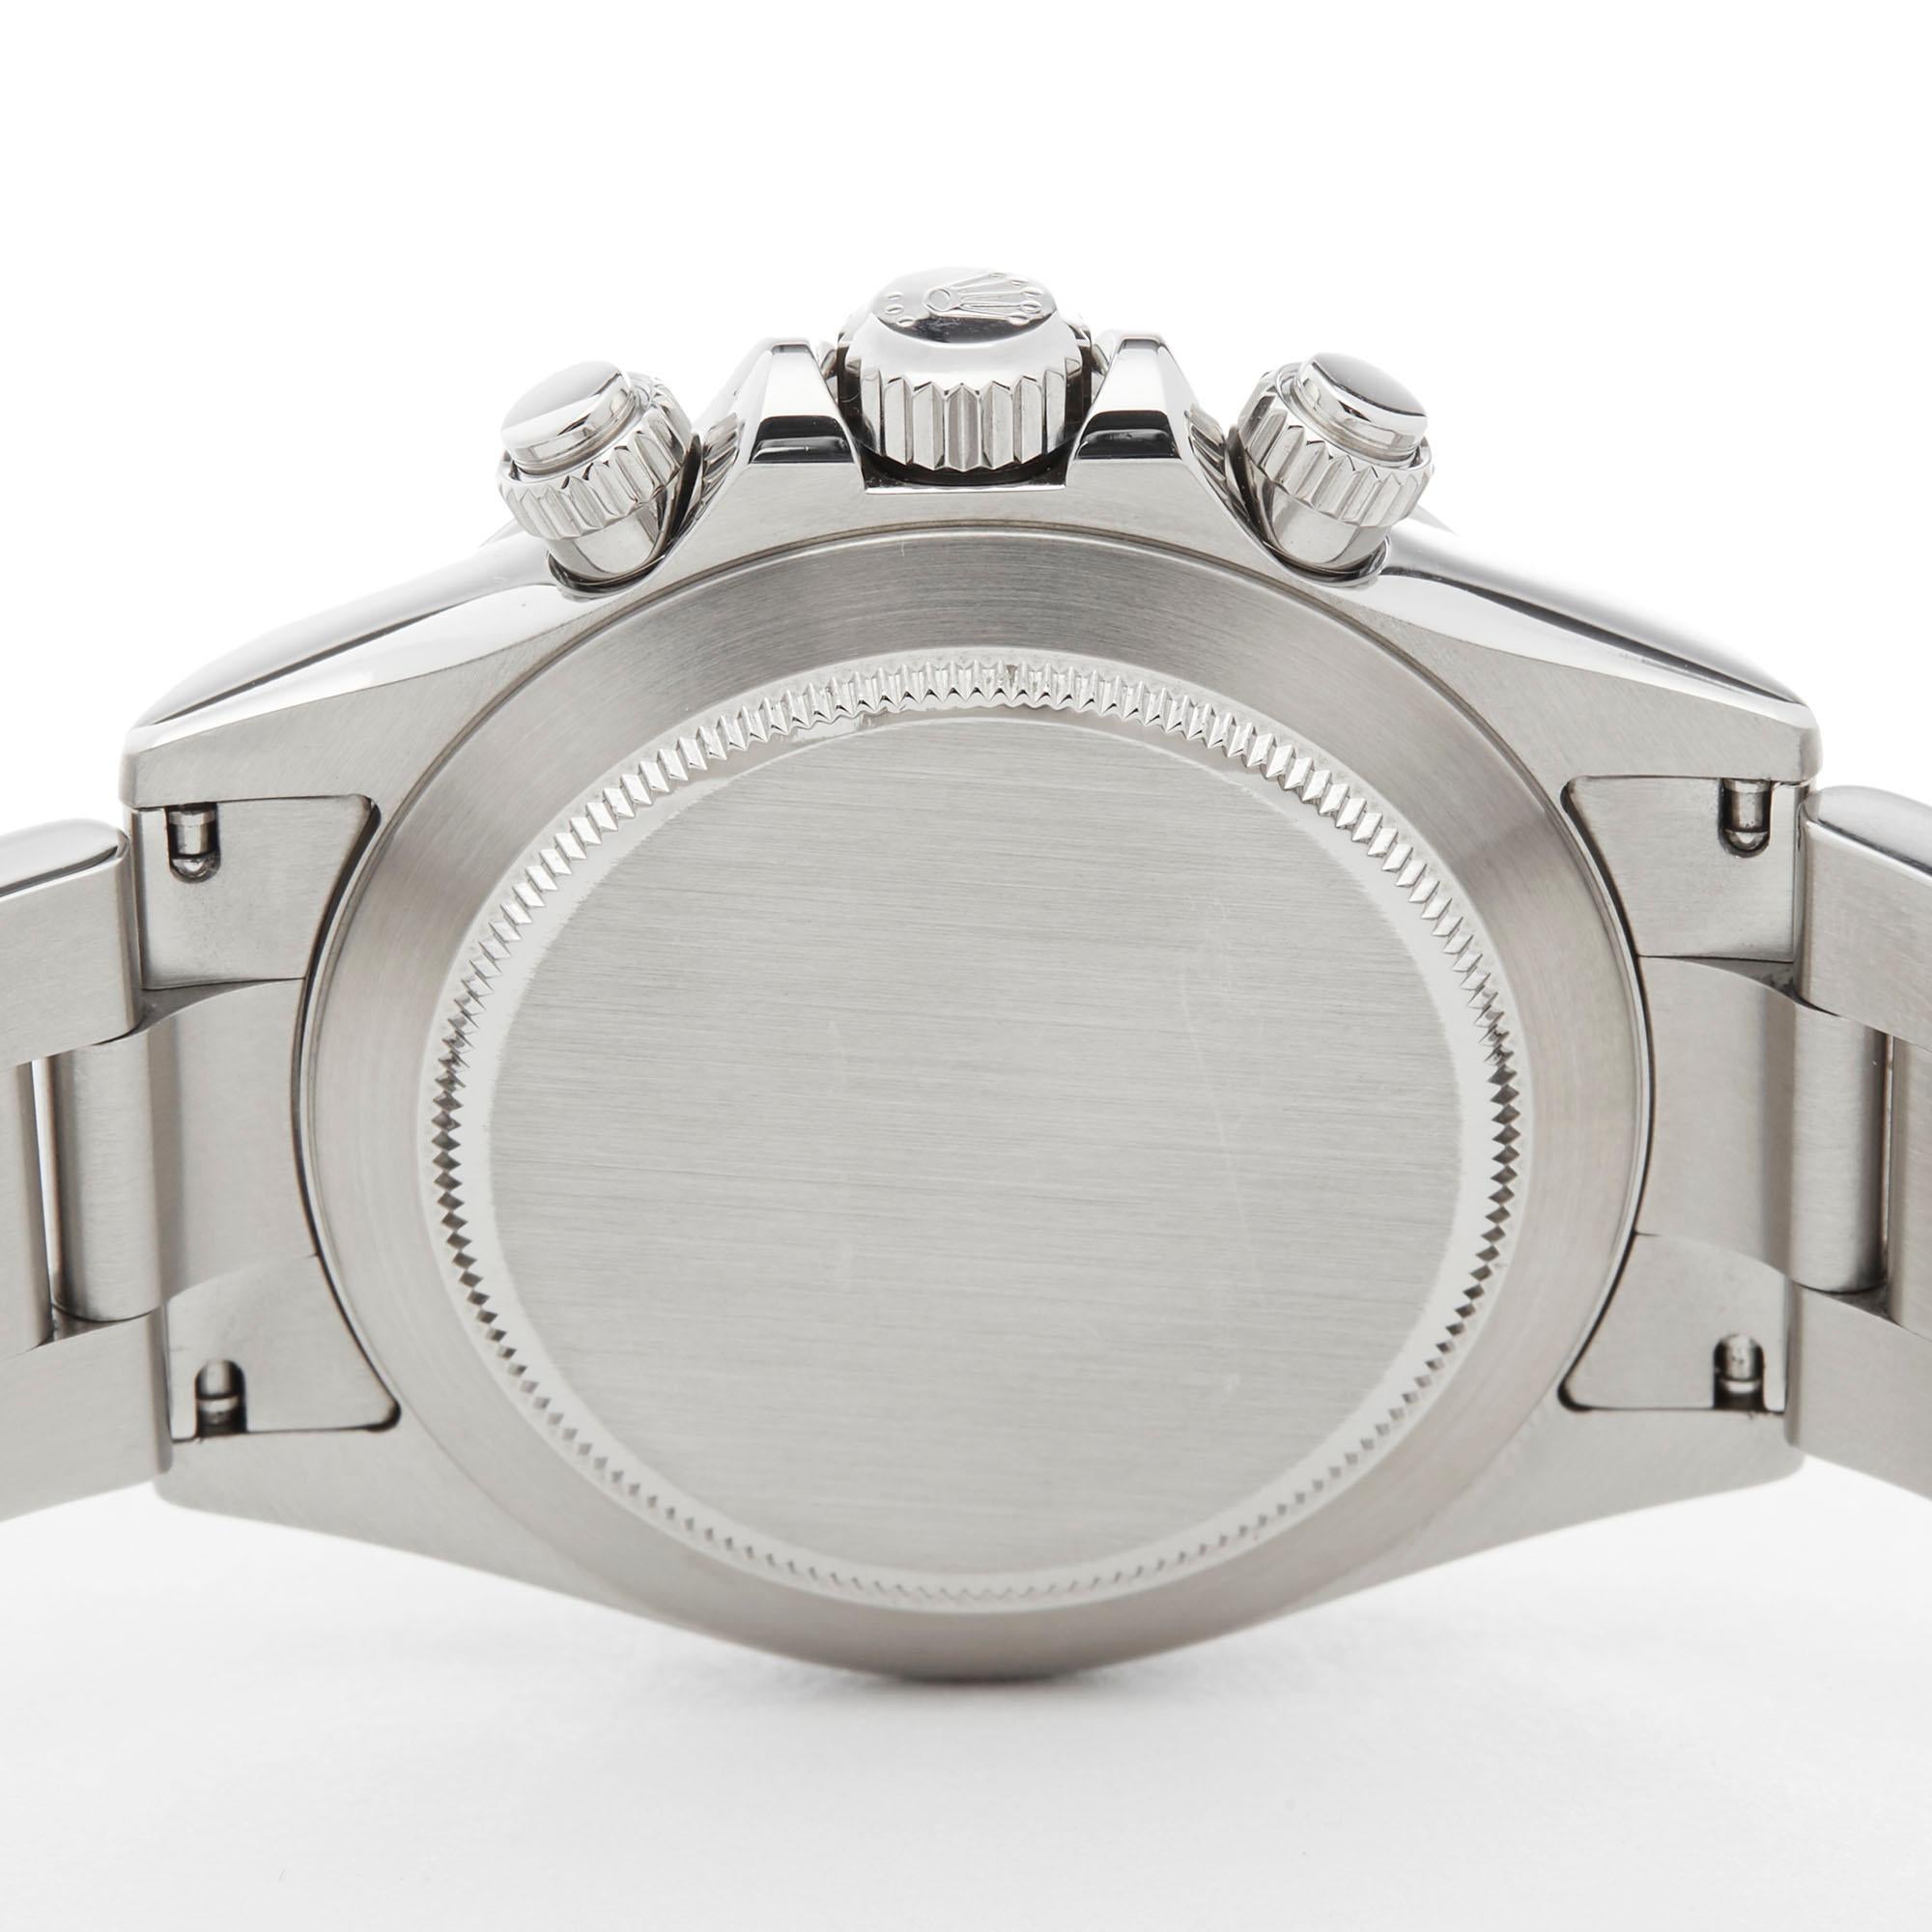 Rolex Daytona Chronograph Stainless Steel 116520 2